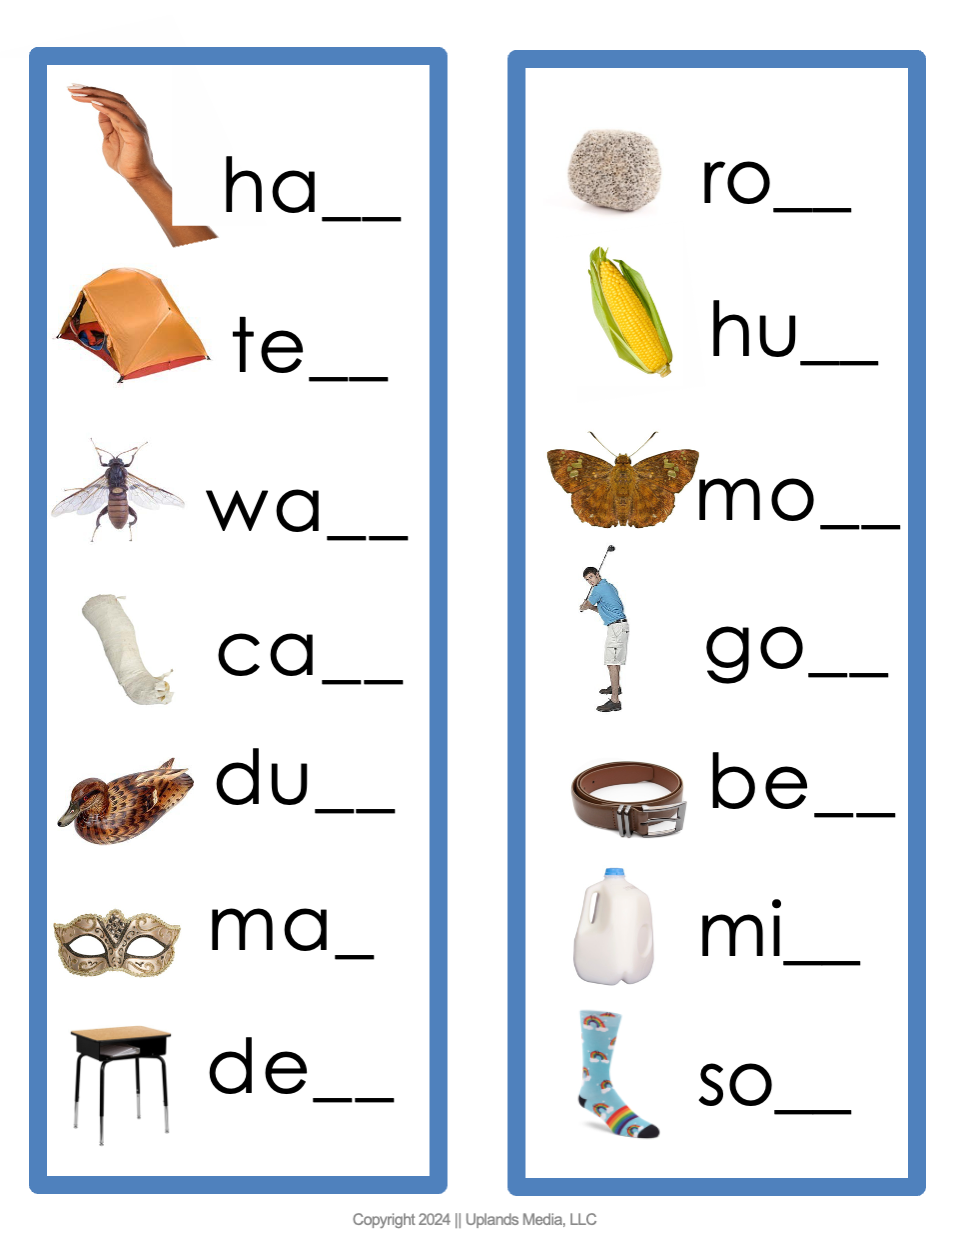 [Bundle] Montessori Early Childhood Language